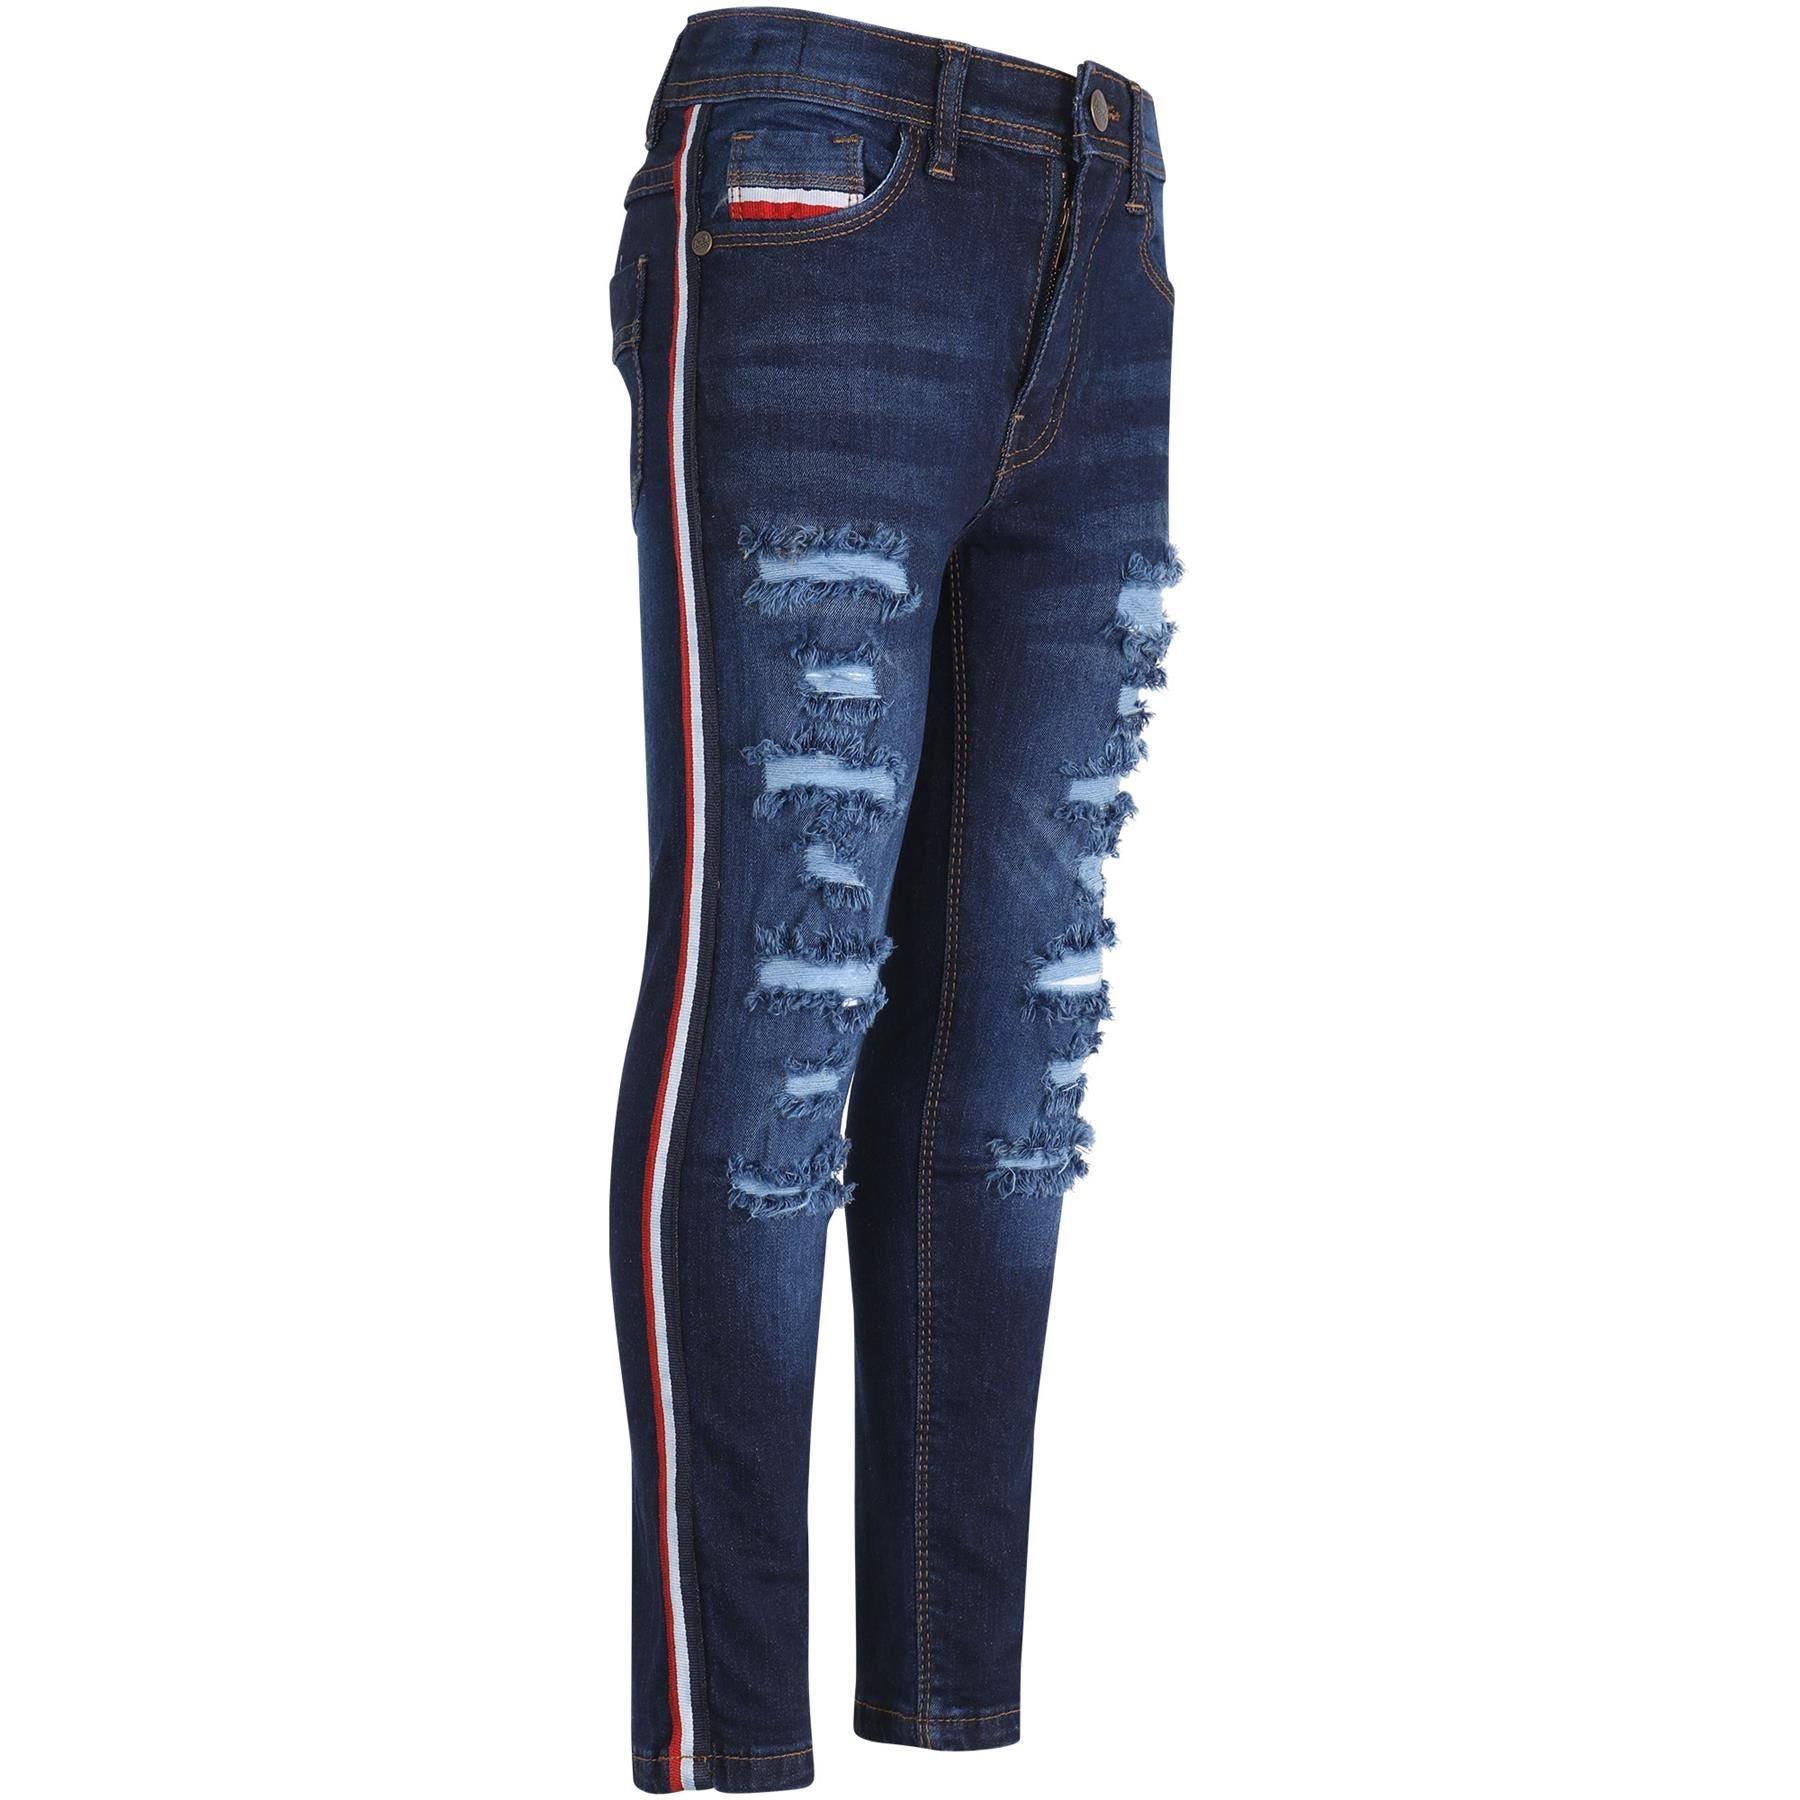 A2Z 4 Kids Girls Stretch Comfortable Jeans Lightweight Denim Ripped Skinny Pants